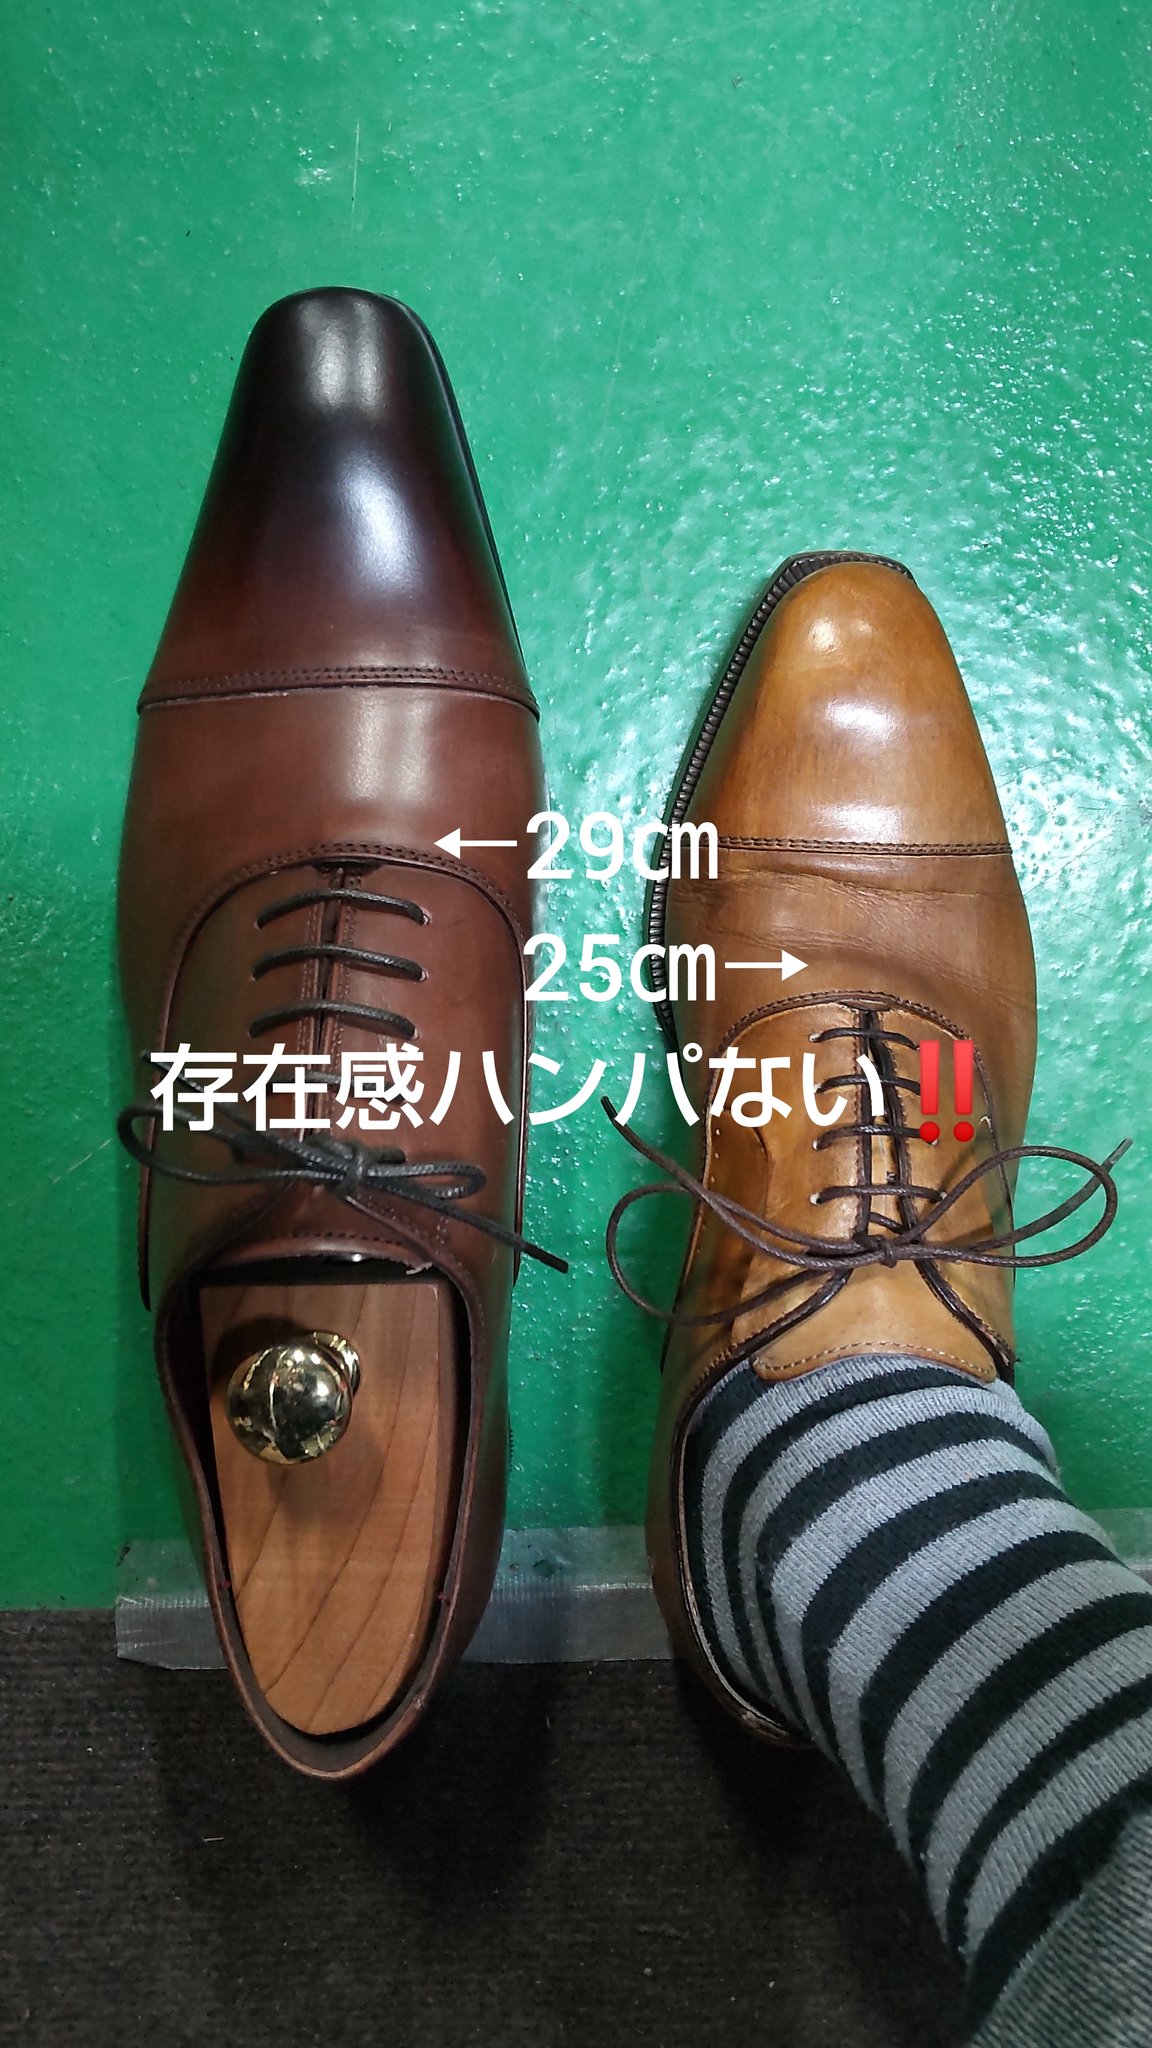 株 コージ製靴 大阪 Fdu3zr5qb6nmuj3 Twitter